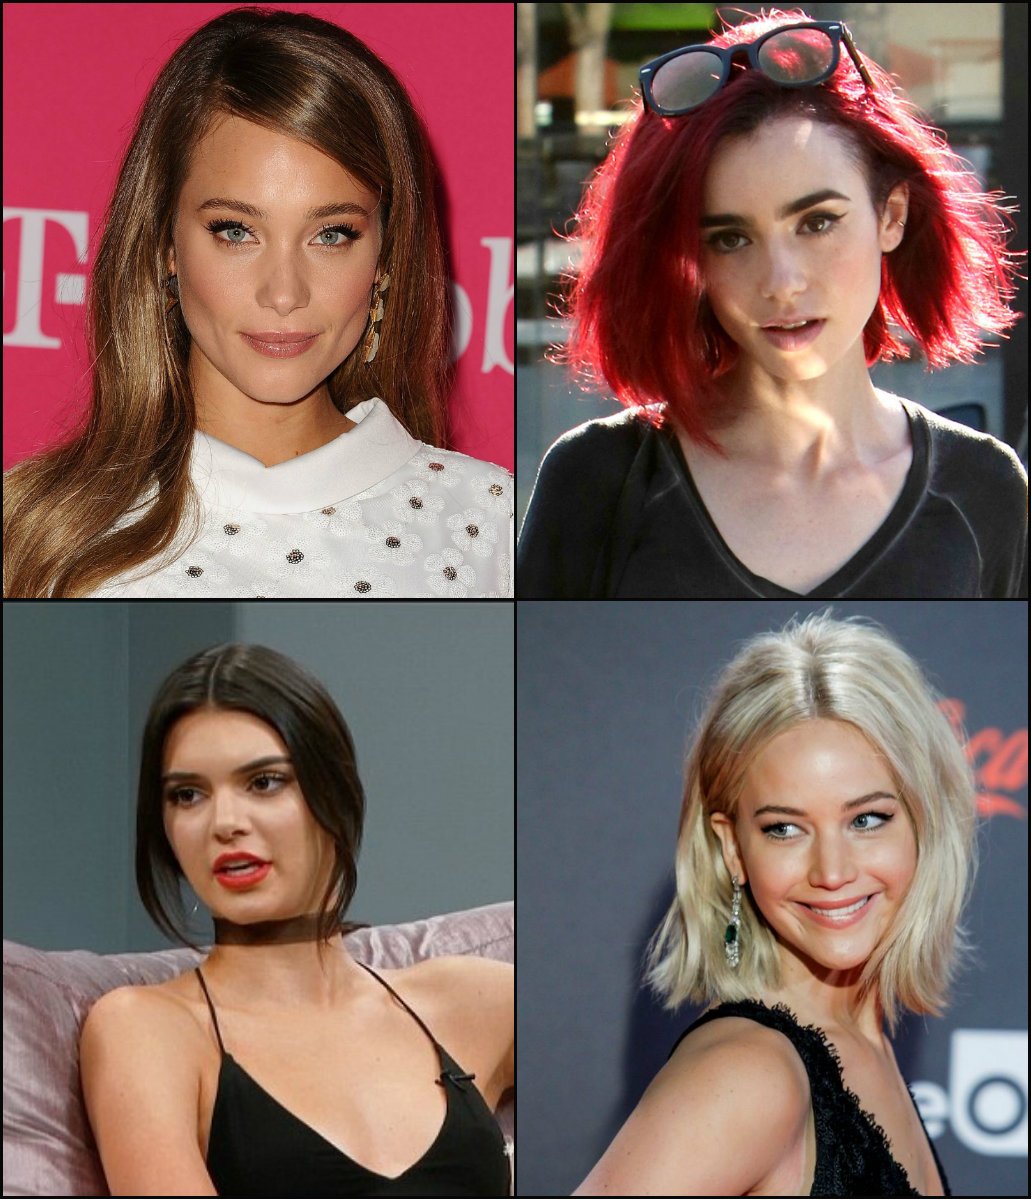 Pretty Hairstyles on X: "Hottest hair color trends 2017 Fall/Winter 2018  https://t.co/9Q3cqwguMp #fall2017 #hairstyles #haircolor #hairtrends2018  #prettyhair https://t.co/Oagyo29vqp" / X